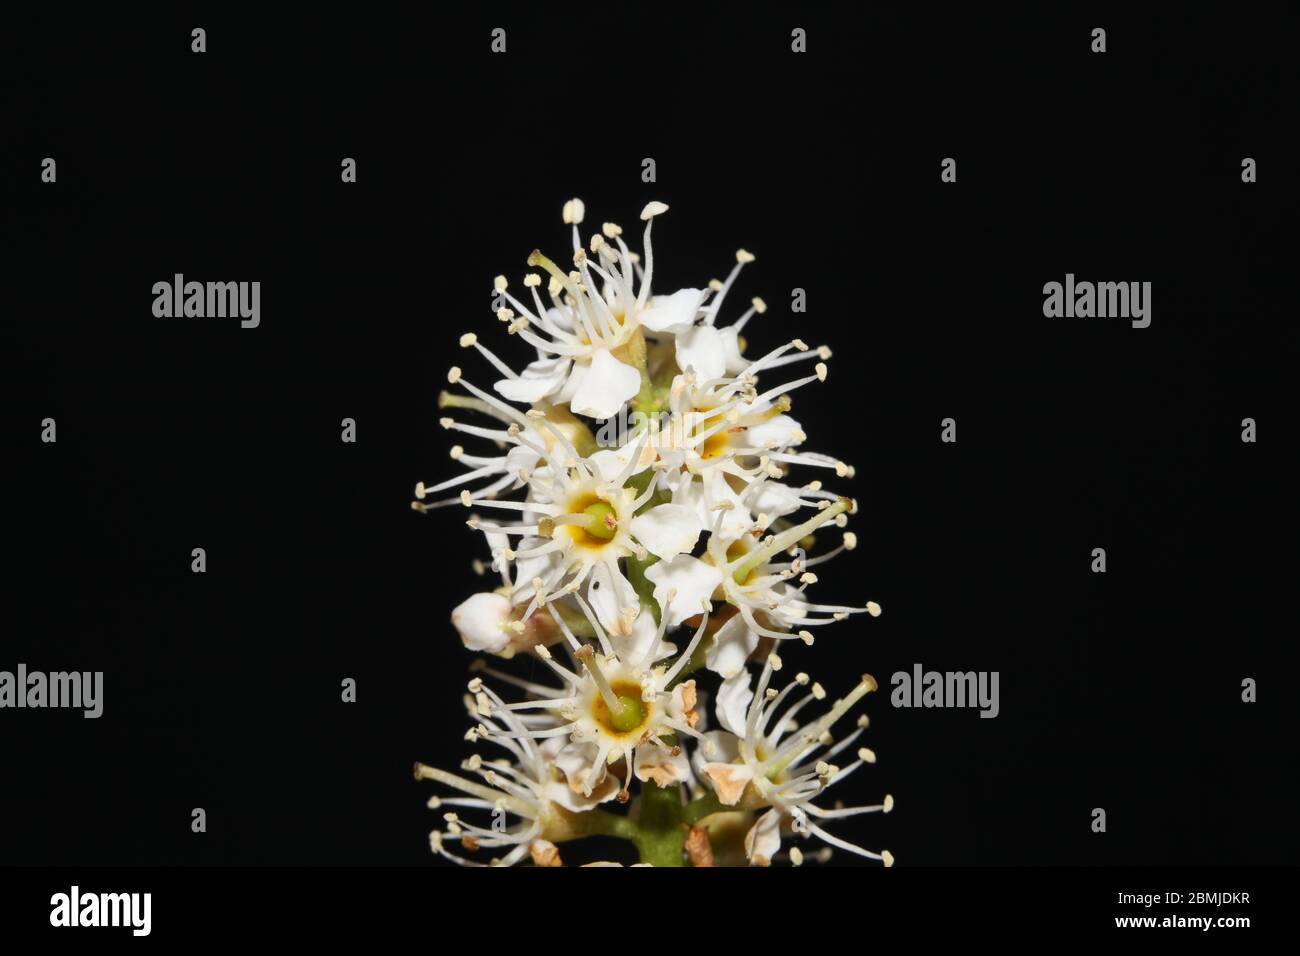 Flower in black macro background prunus lusitanica family rosaceae high quality print Stock Photo